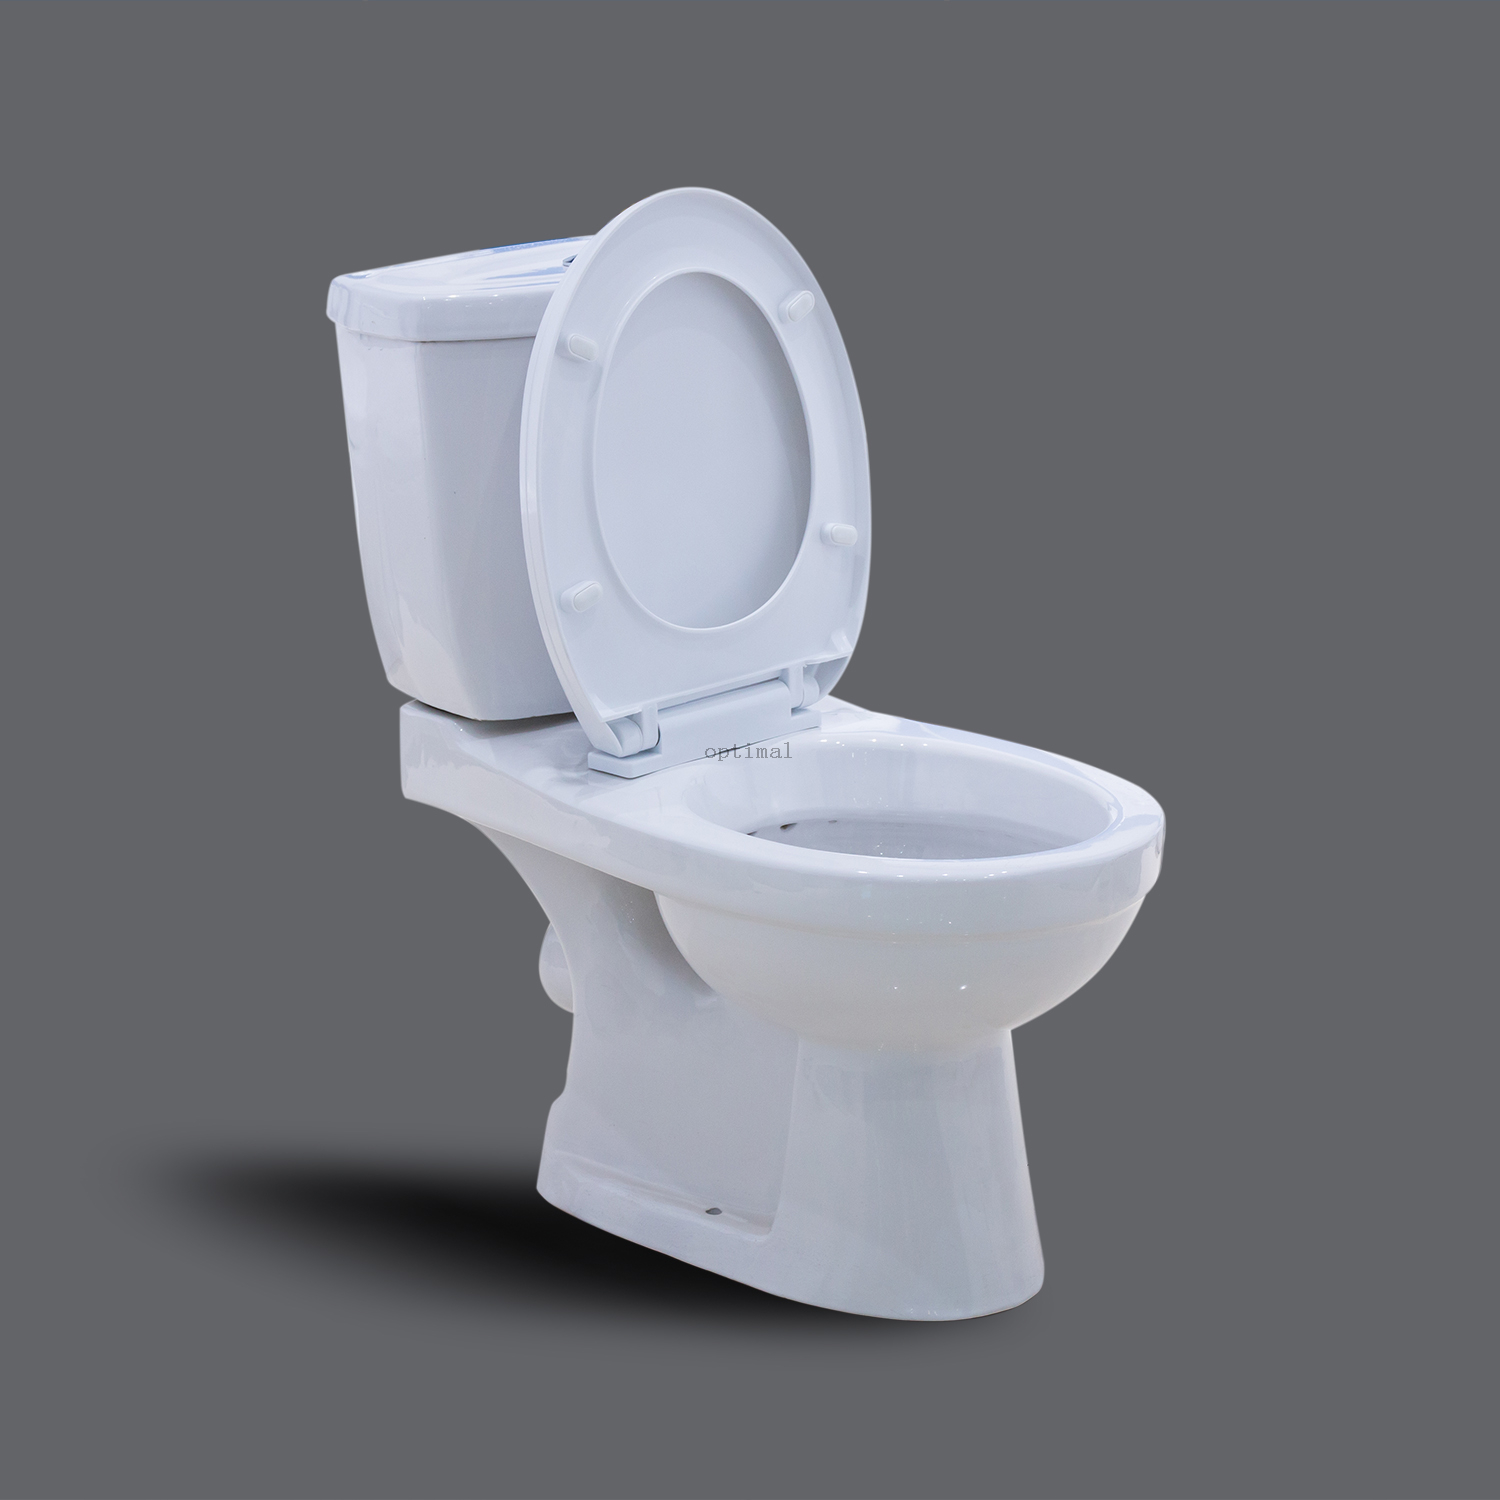 Sanitary Ware Ceramic Two-Piece Toilet P-Trap 180mm Washdown Flushing